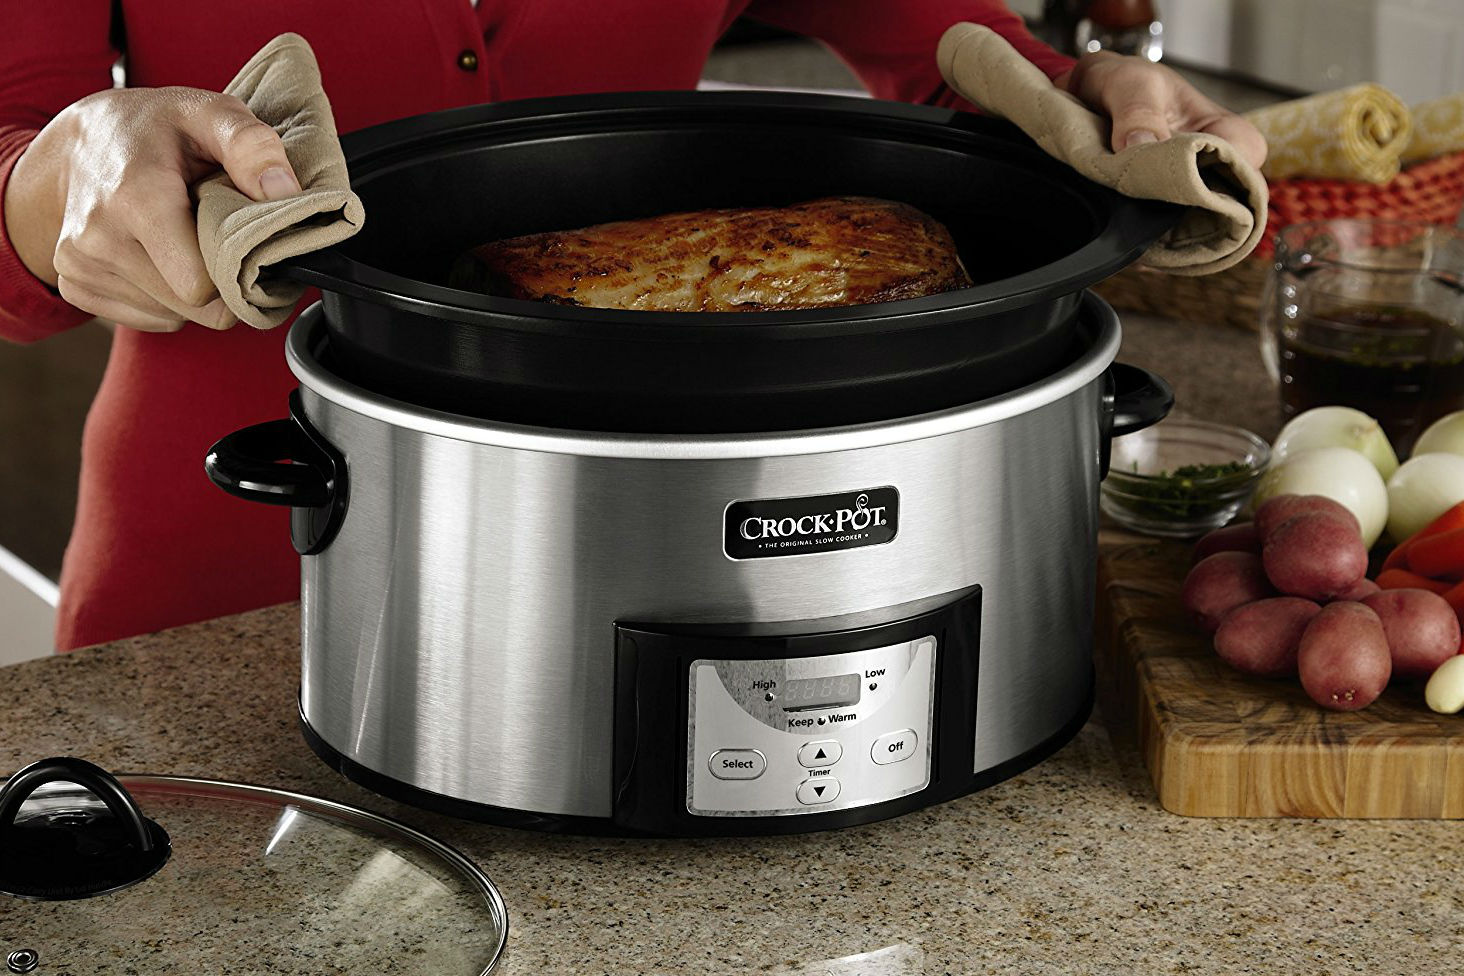 Crock-pot Crockpot 6-Quart Connected Slow Cooker, Works With Alexa